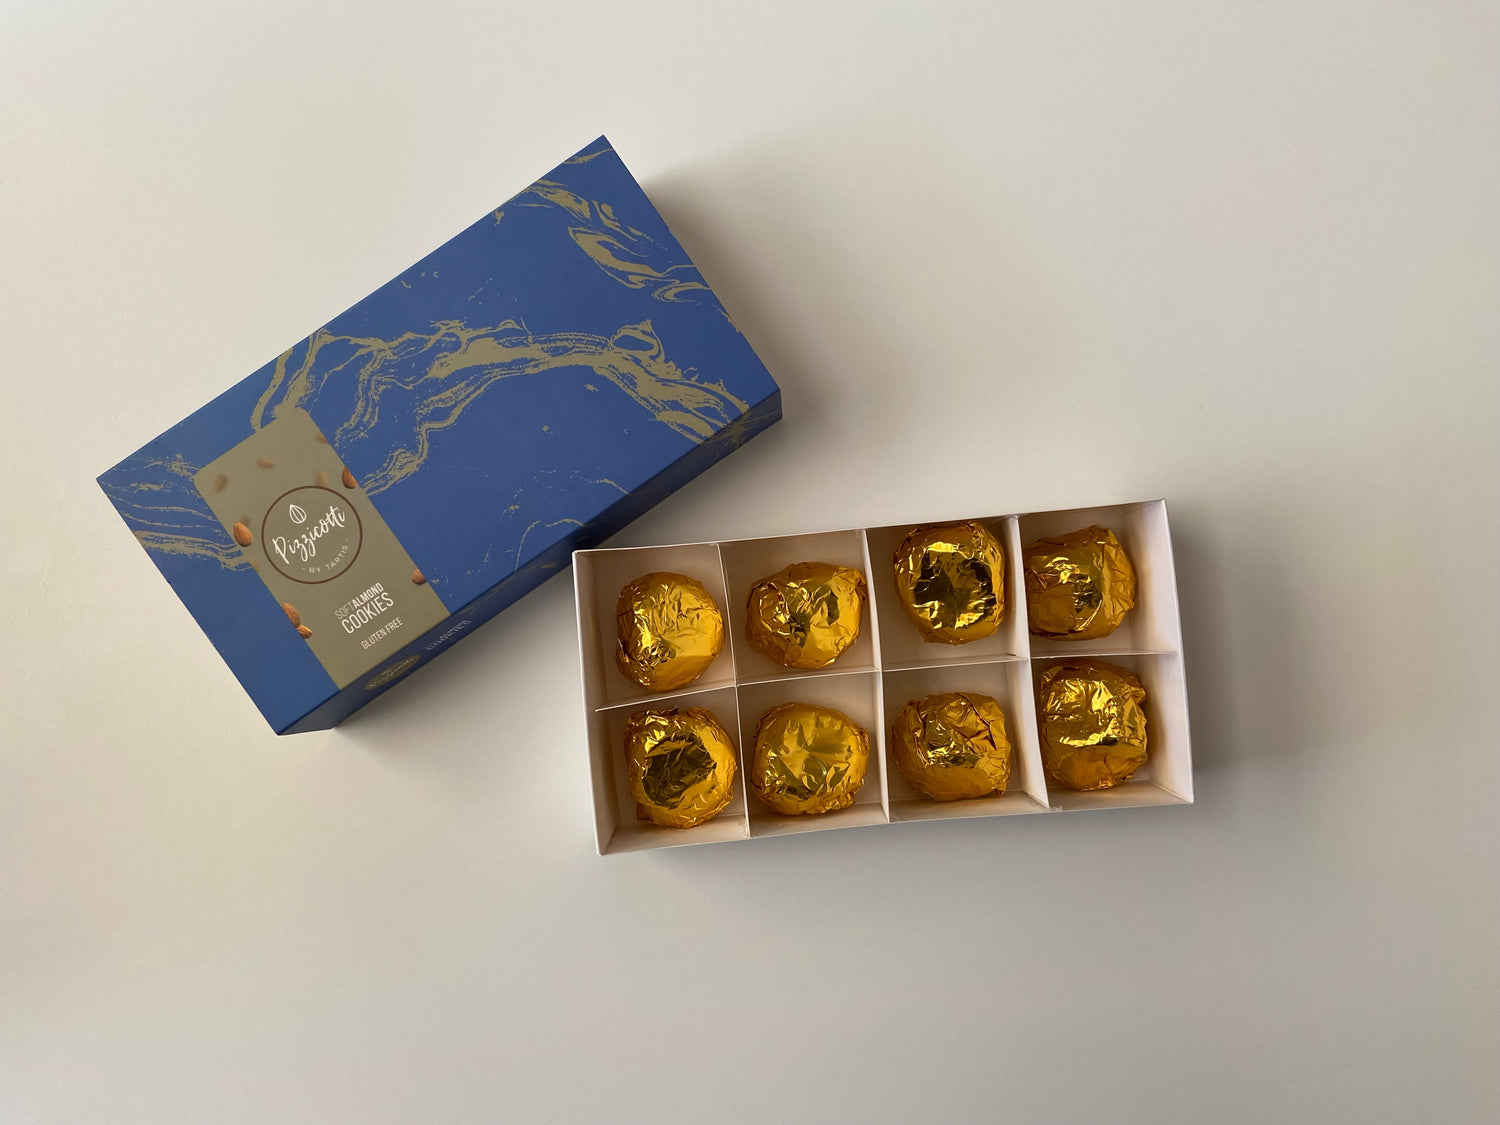 Pizzicotti in an open box, eight golden wrapped Pizzicotti per box